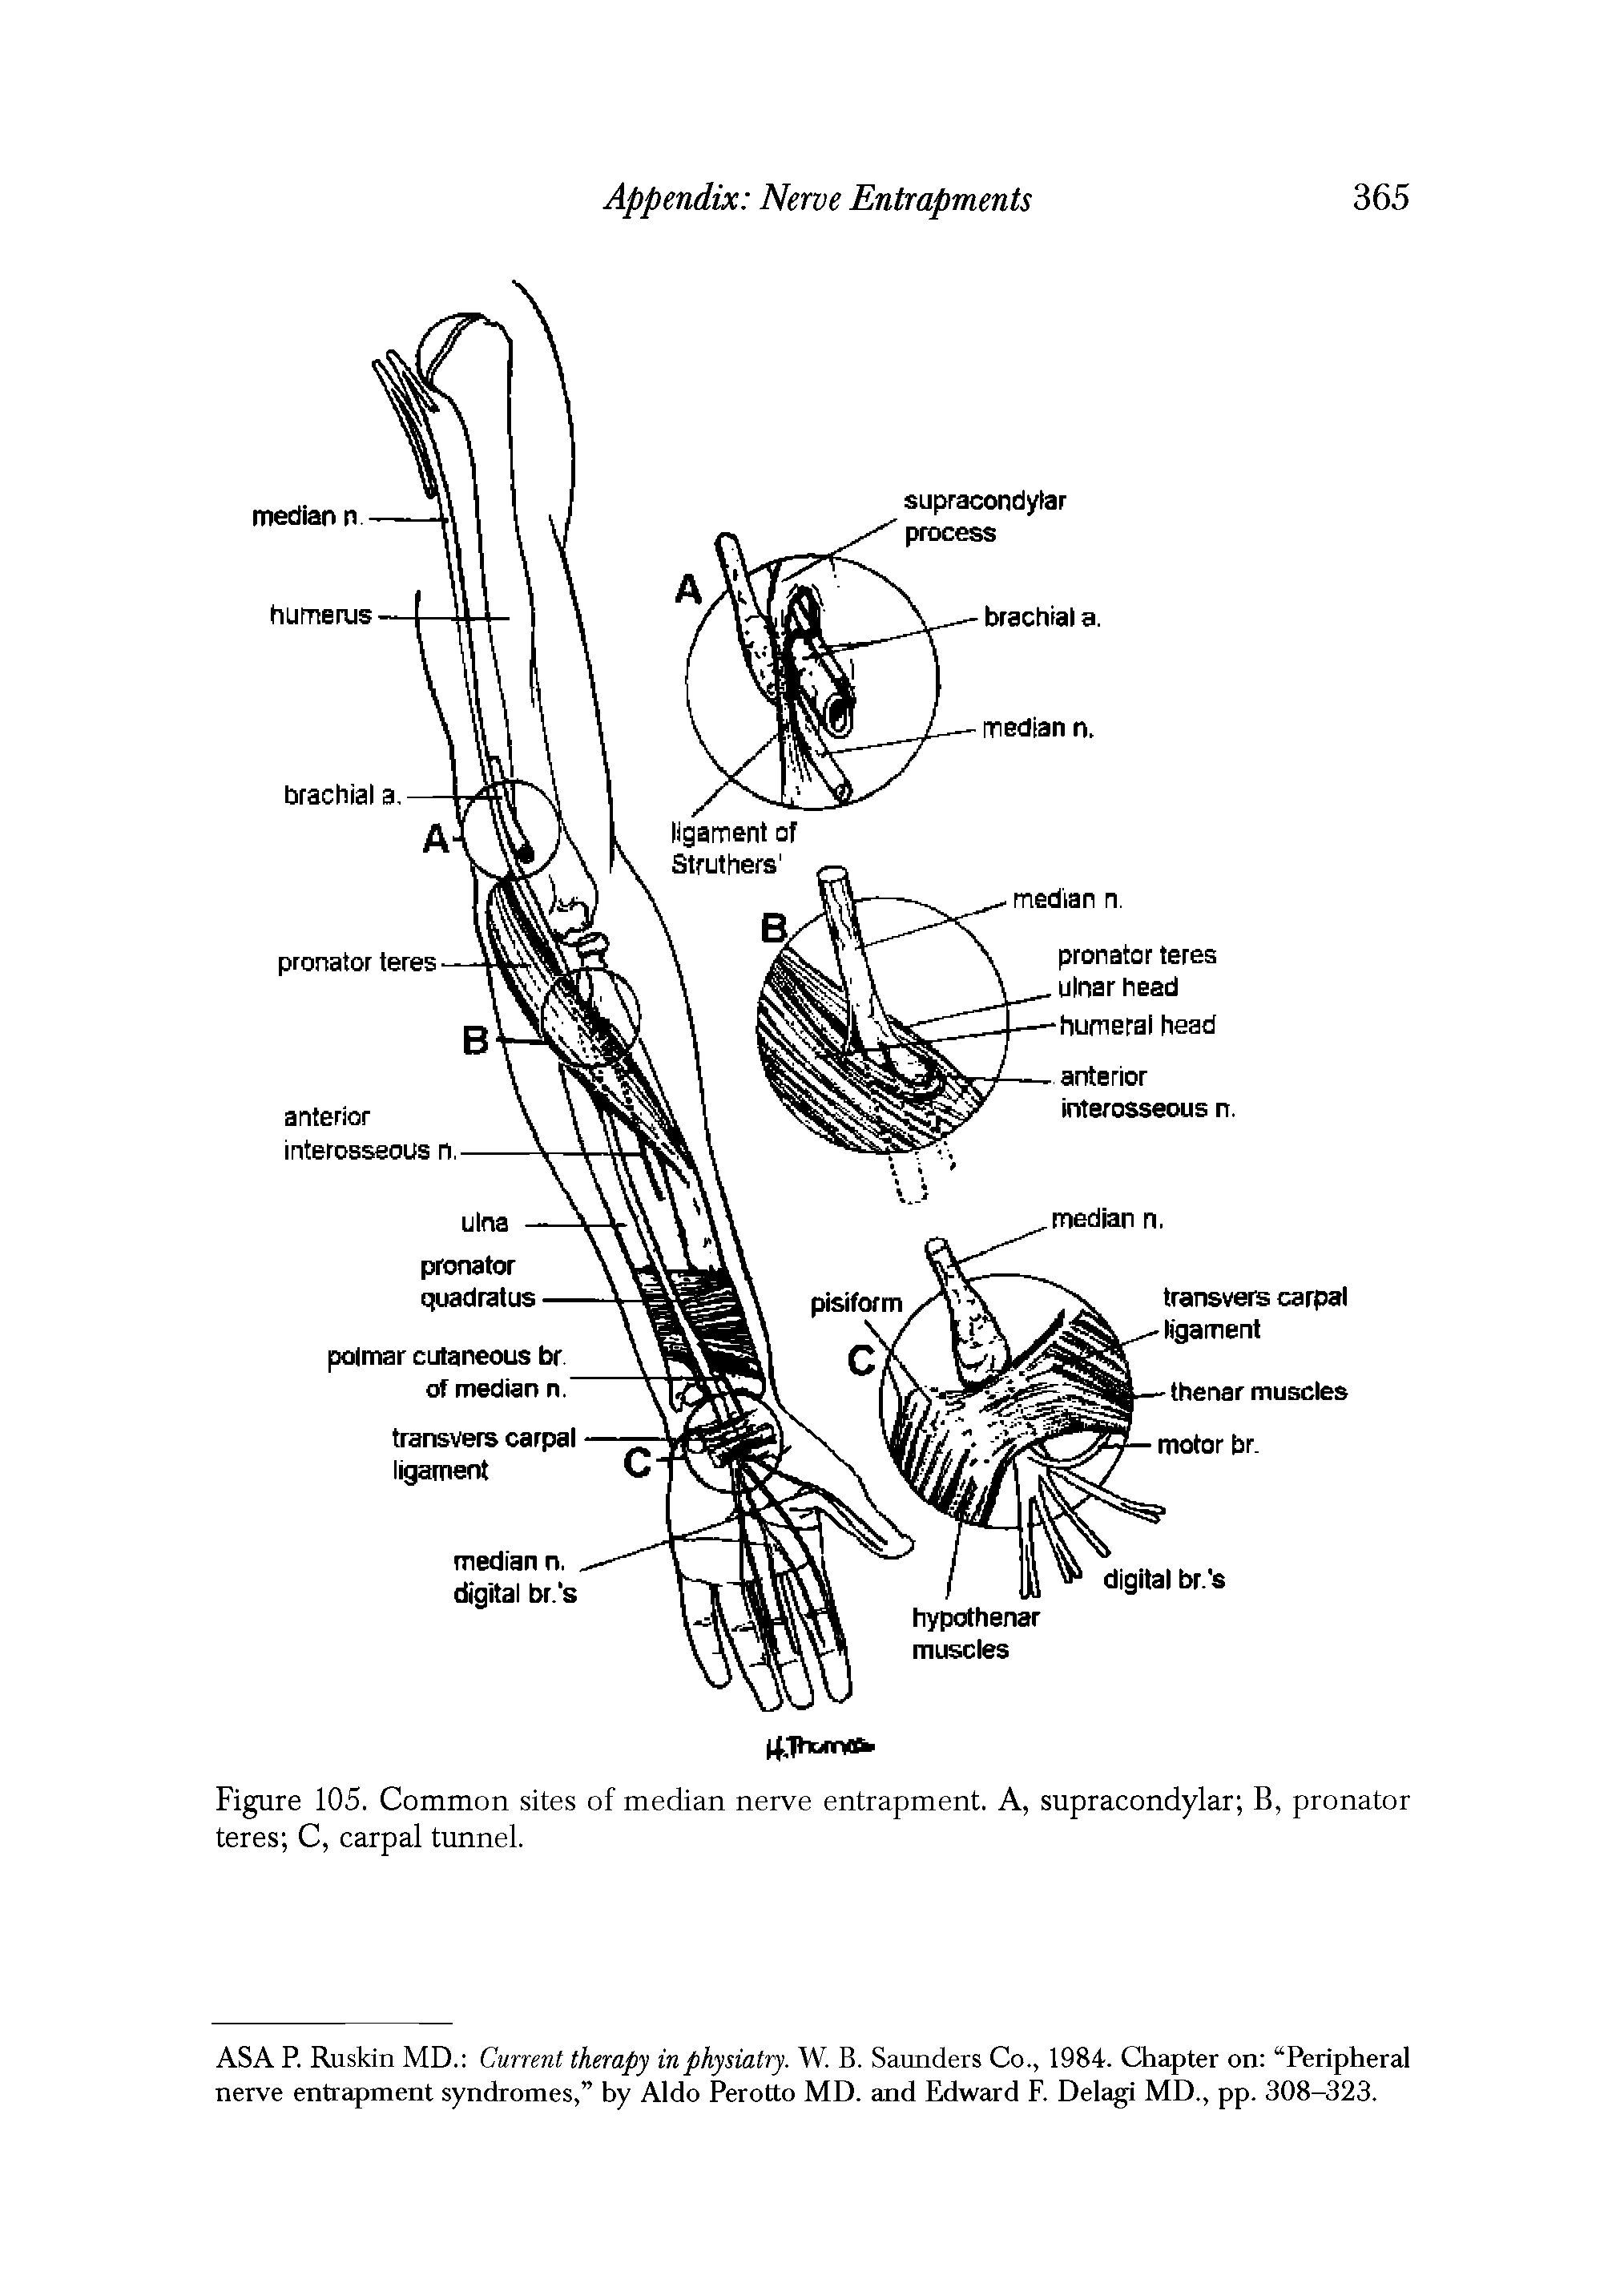 Figure 105. Common sites of median nerve entrapment. A, supracondylar B, pronator teres C, carpal trmnel.